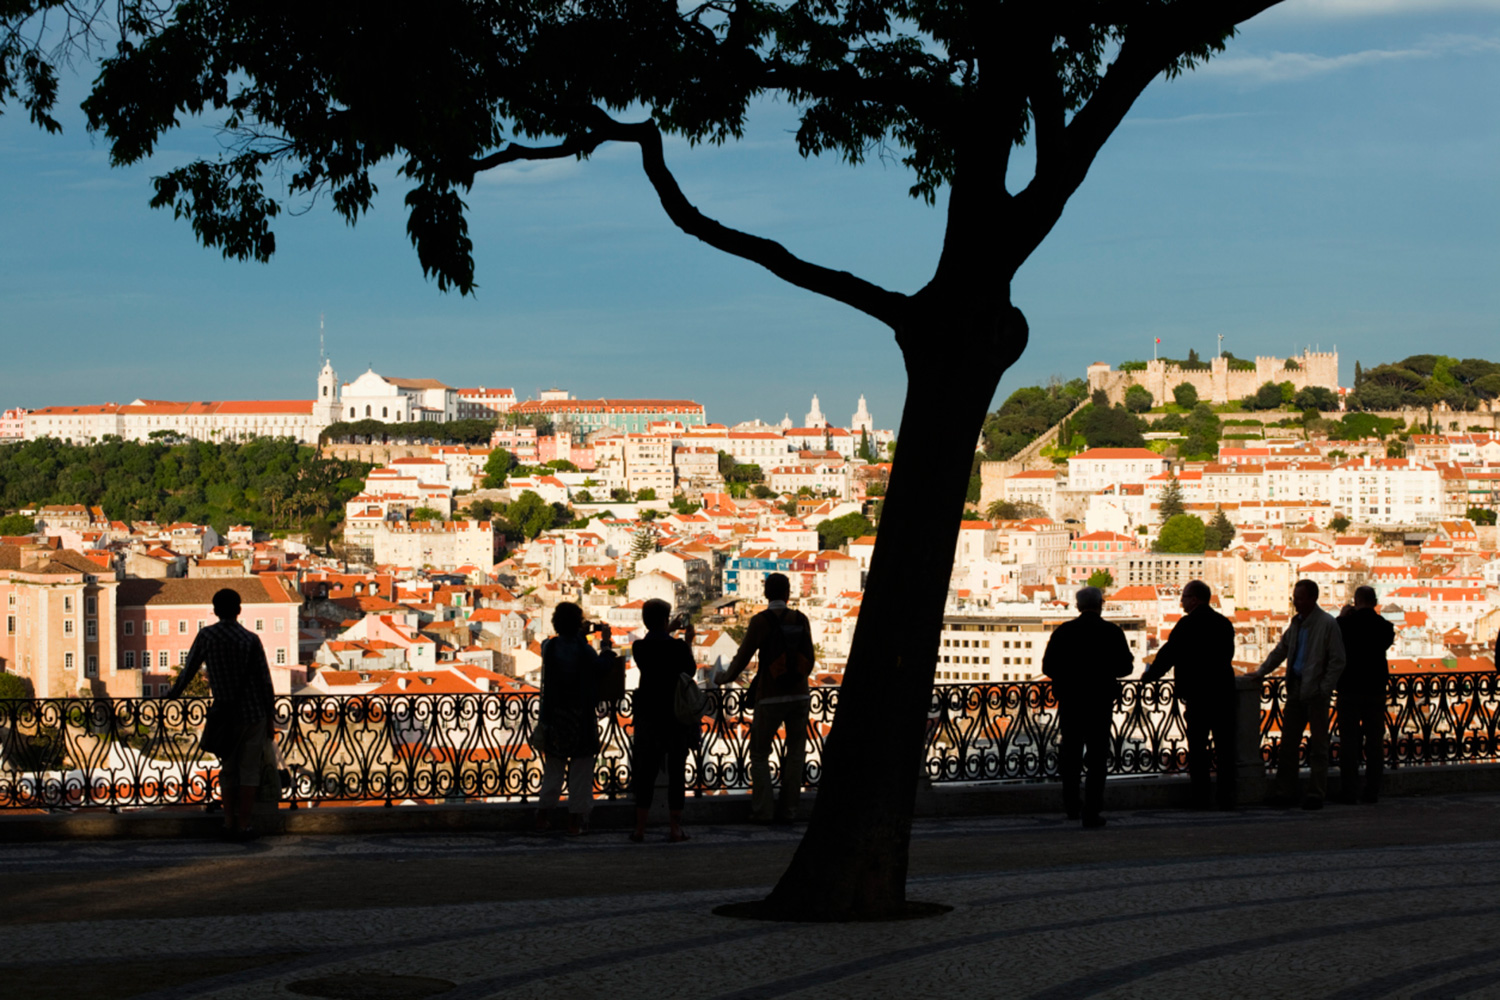 Lisbon,-Portugal